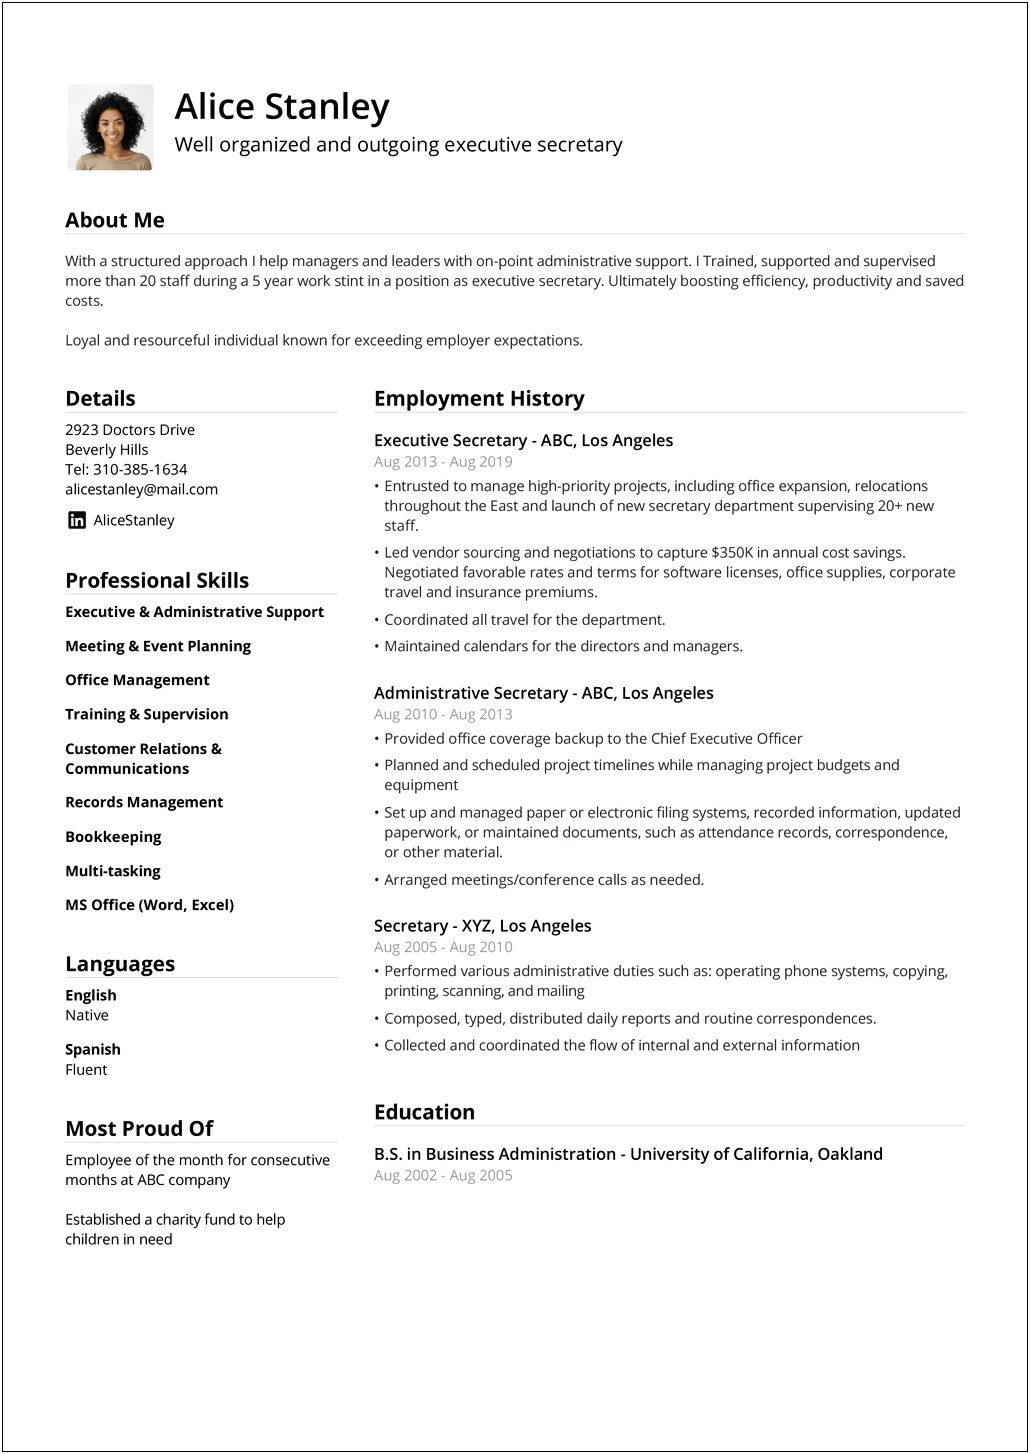 Free Online Resume Creator Software